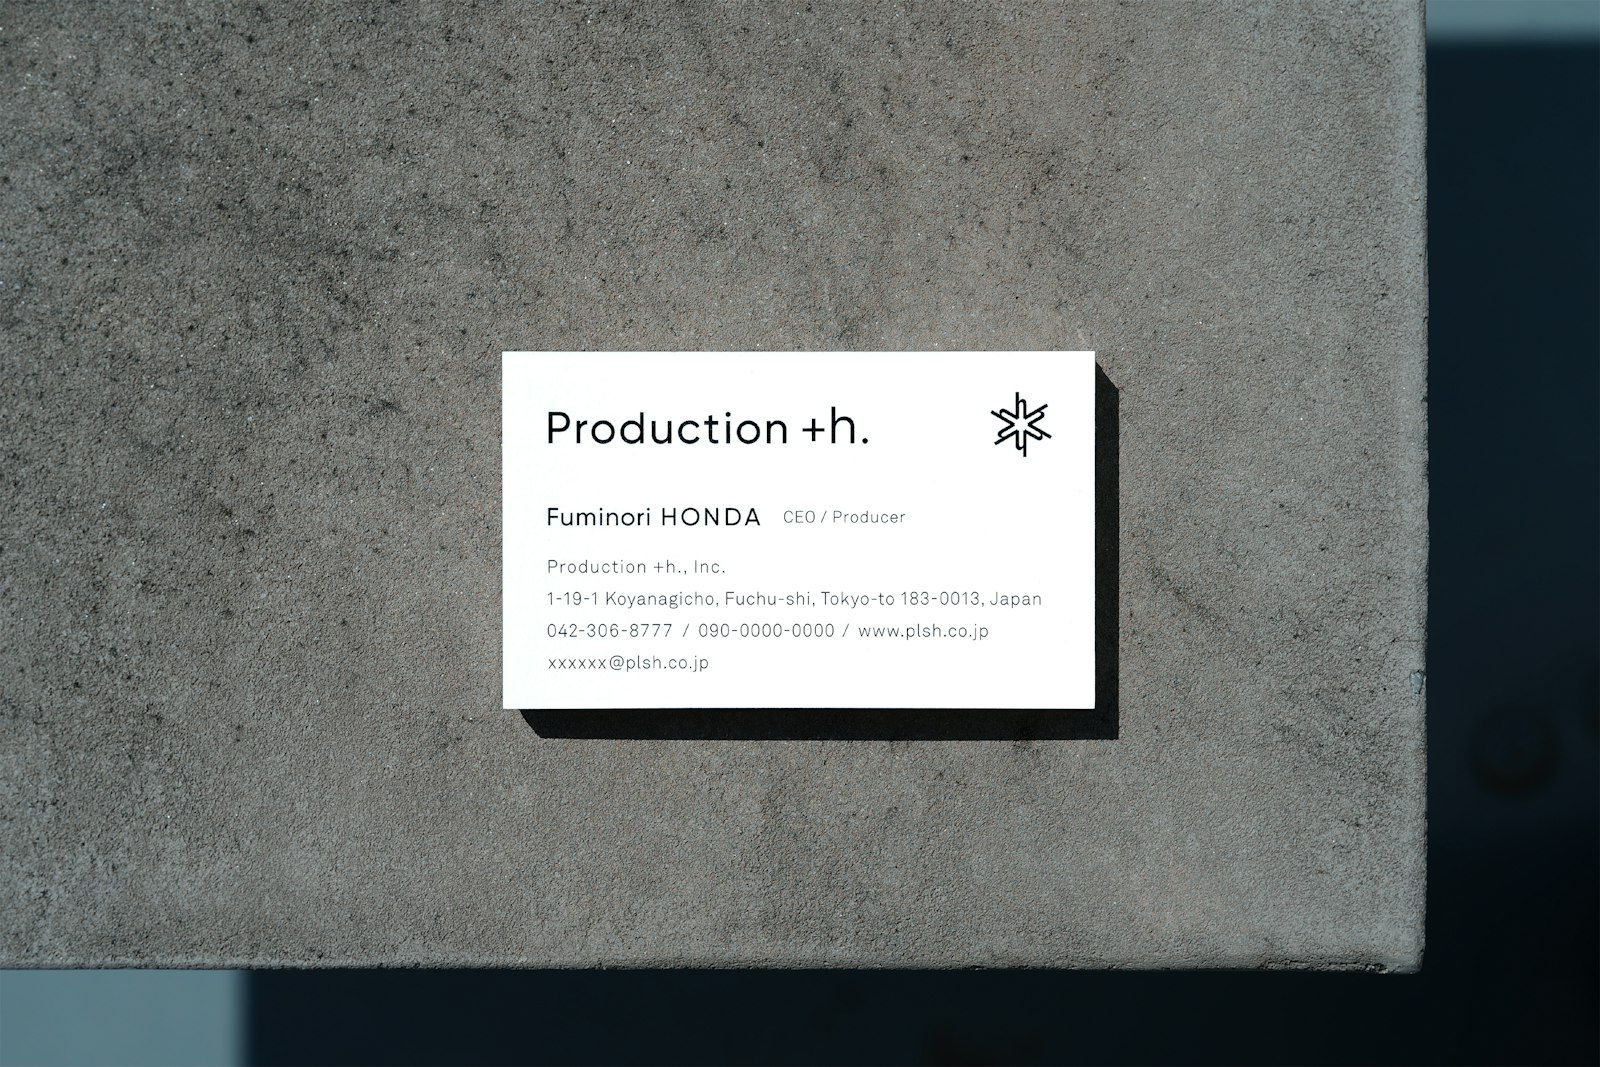 Production +h.